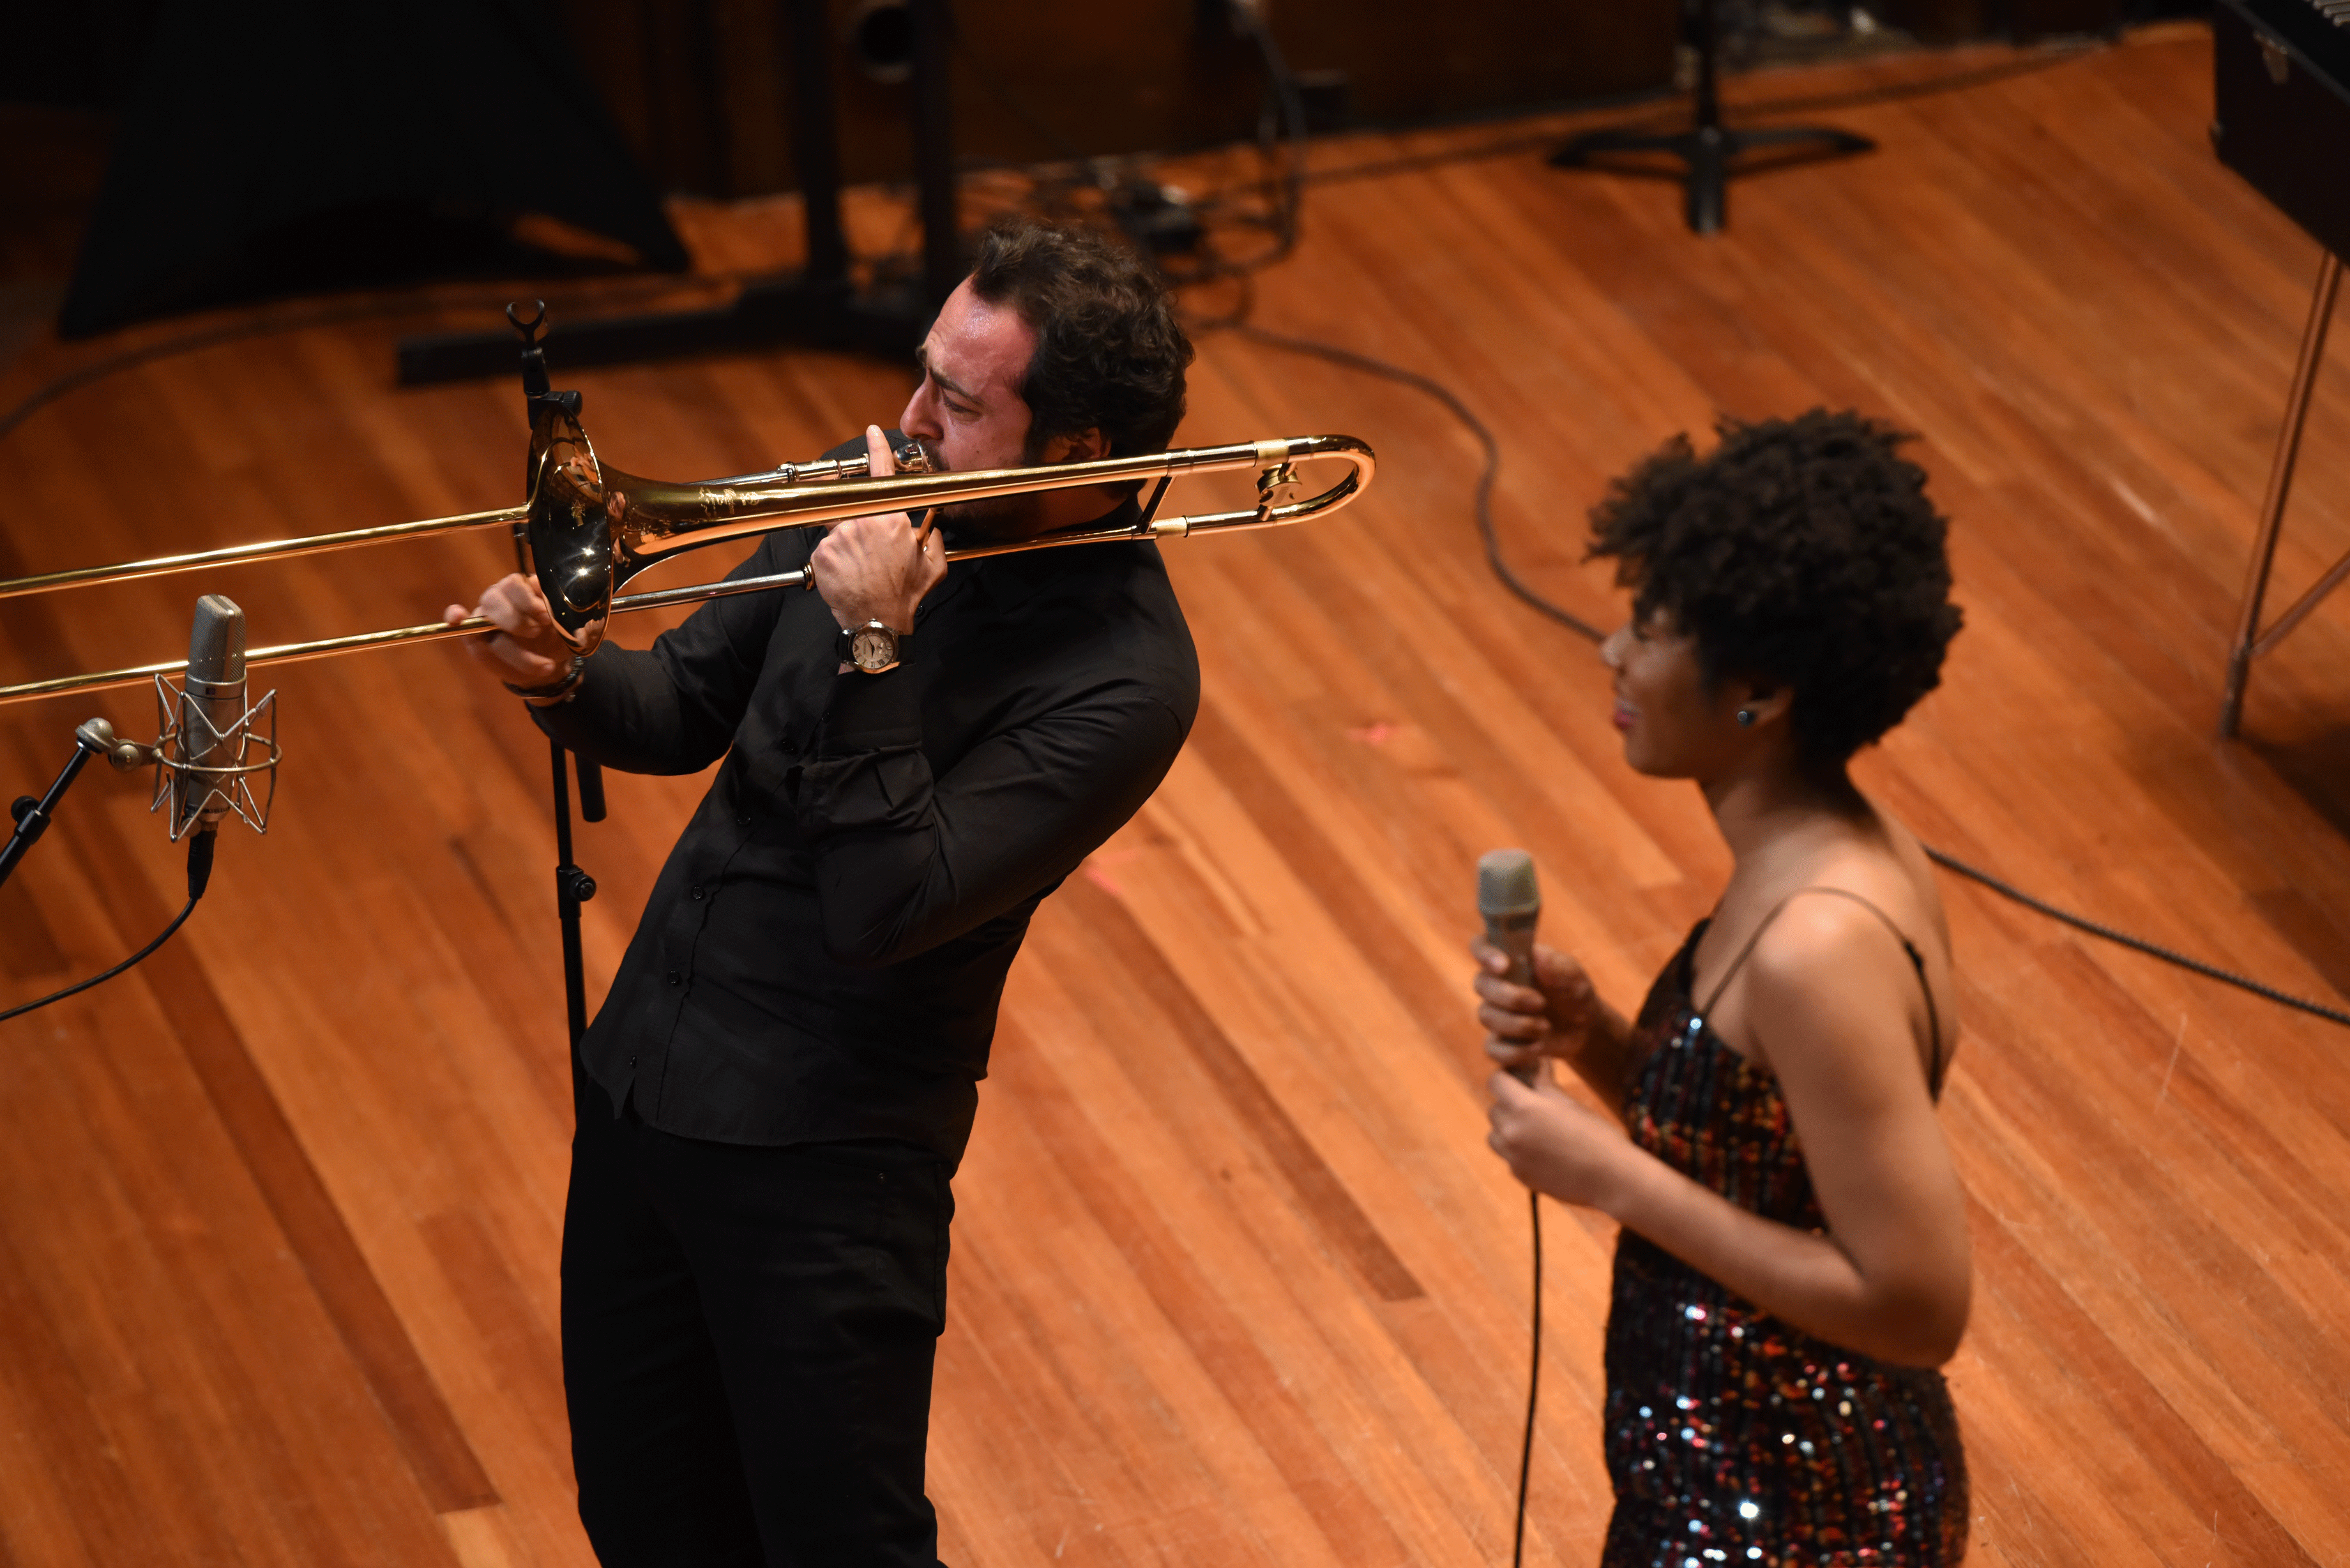 Bulut Gulen plays trombone while Darynn Dean holds a microphone